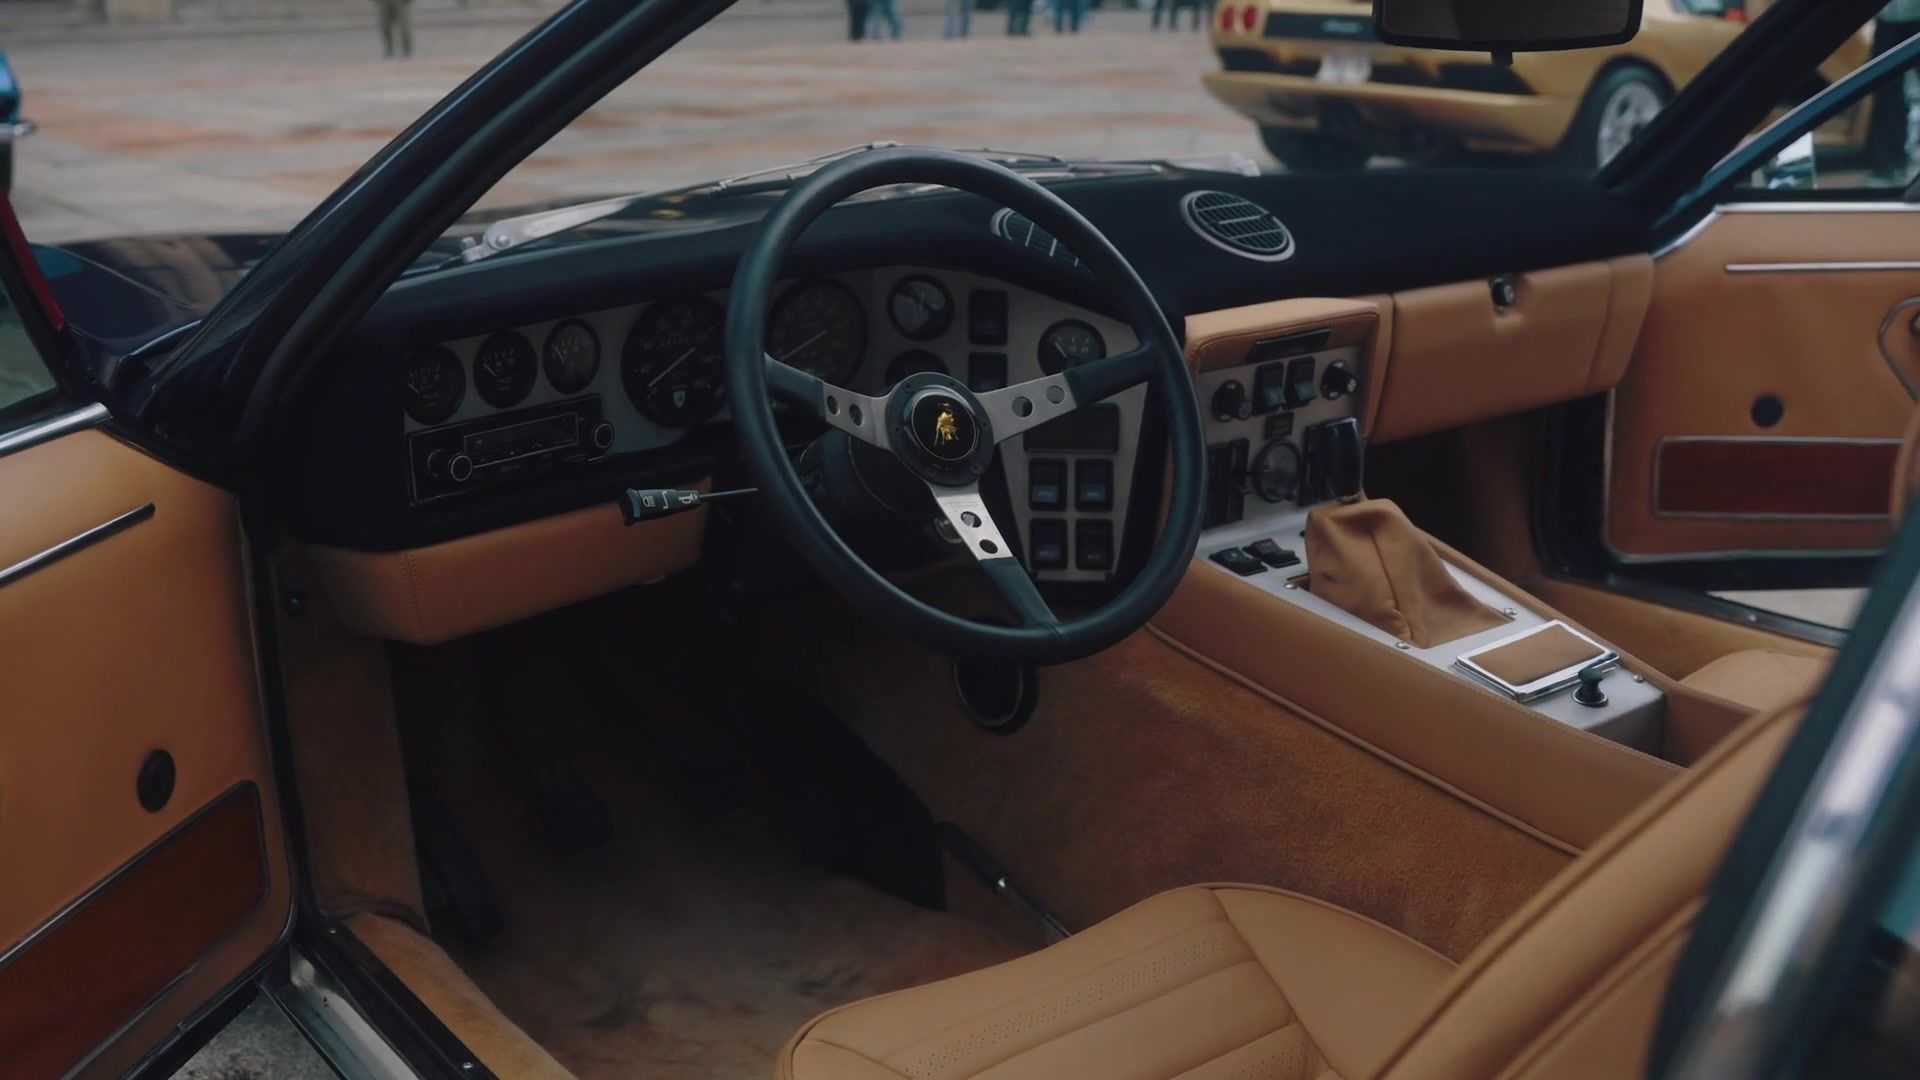 The throbbing heart of Lamborghini - The beginning of a legendary legacy